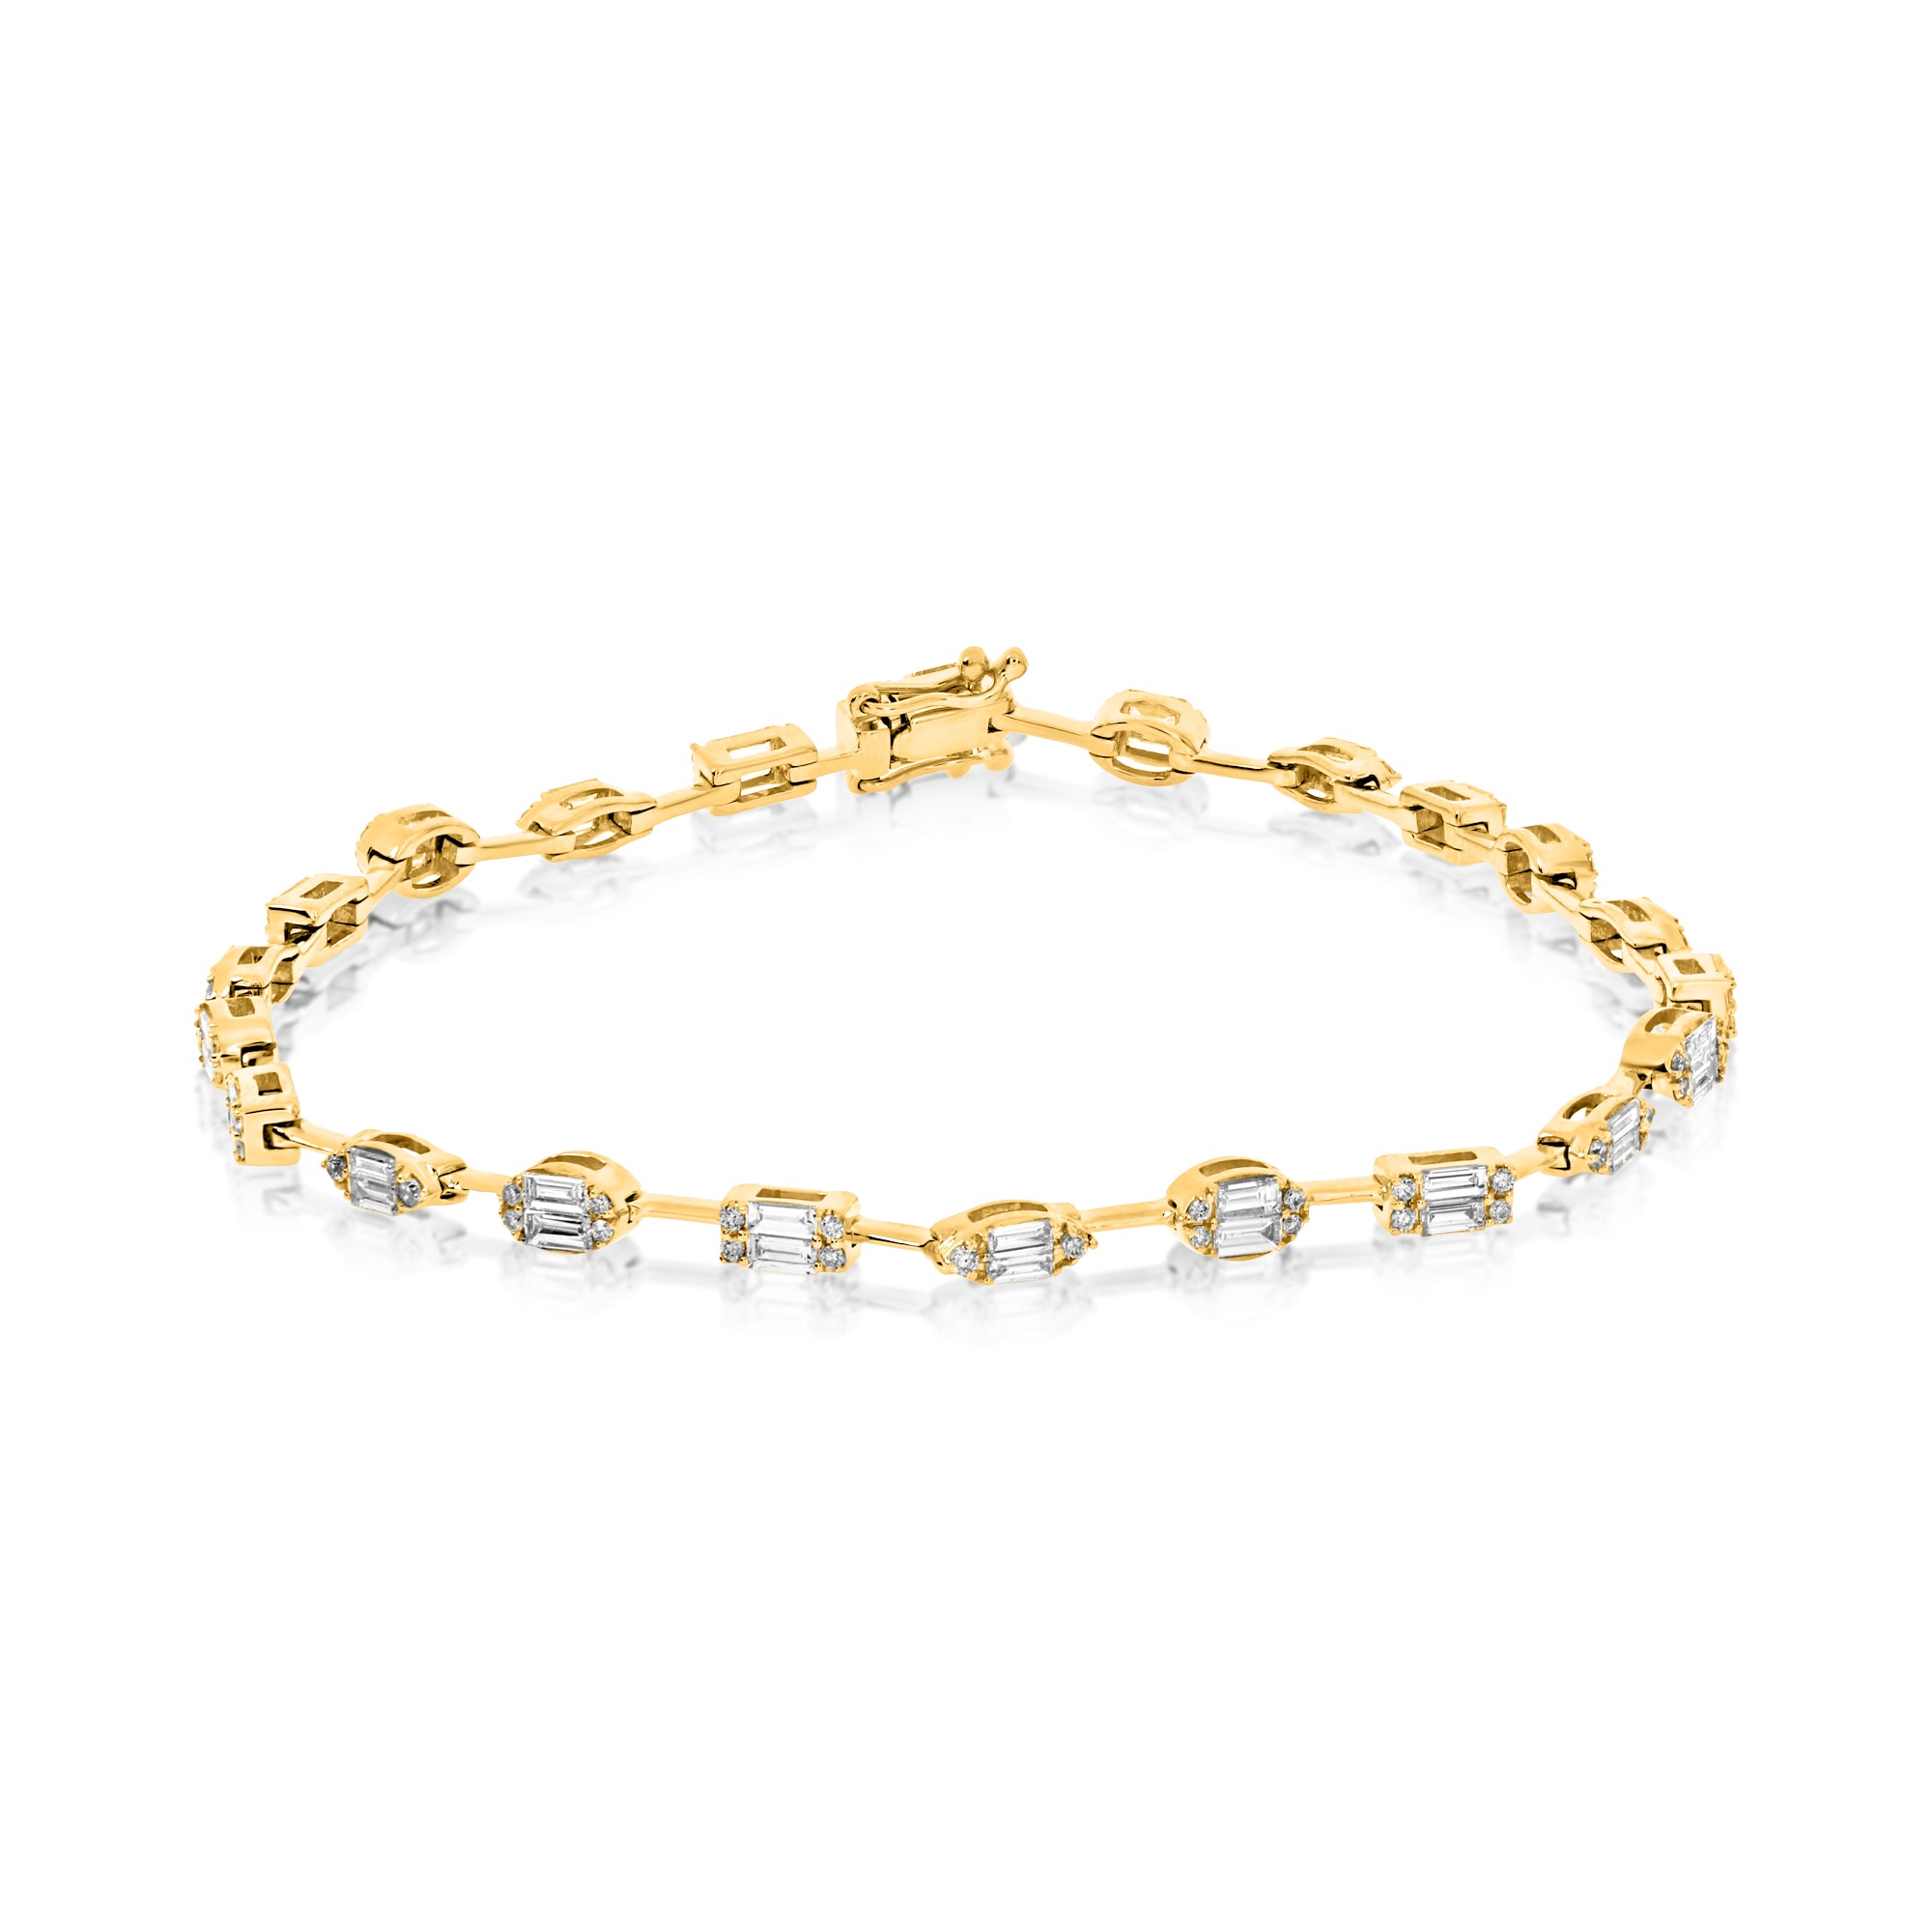 Baguette Diamond Bracelet in yellow gold